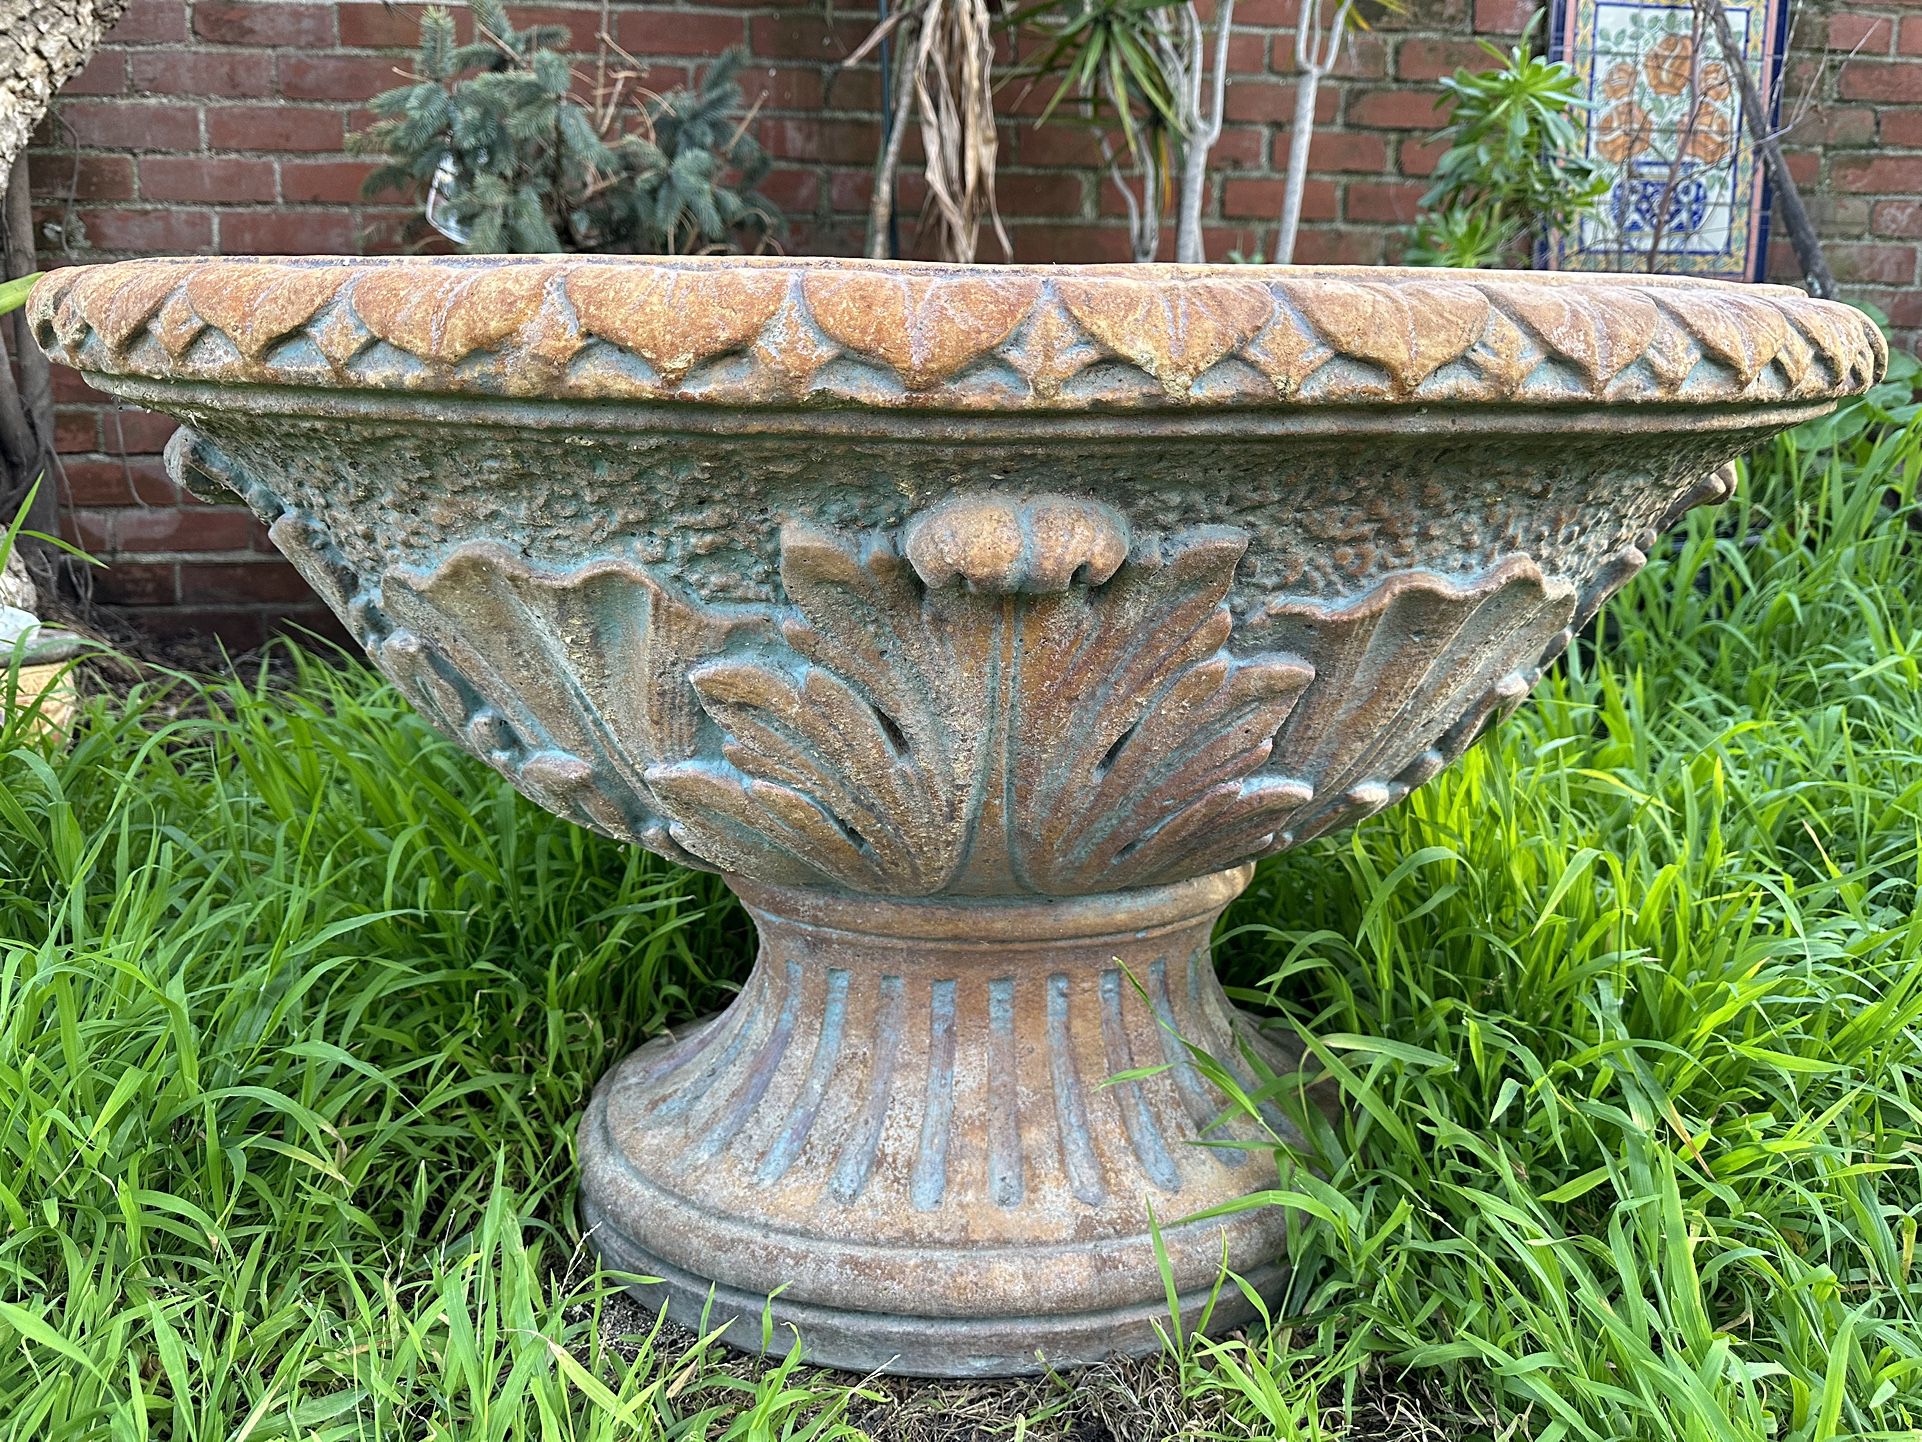 Beautiful Very Large Ceramic Planter / Ceramic Pot 2’ Tall 